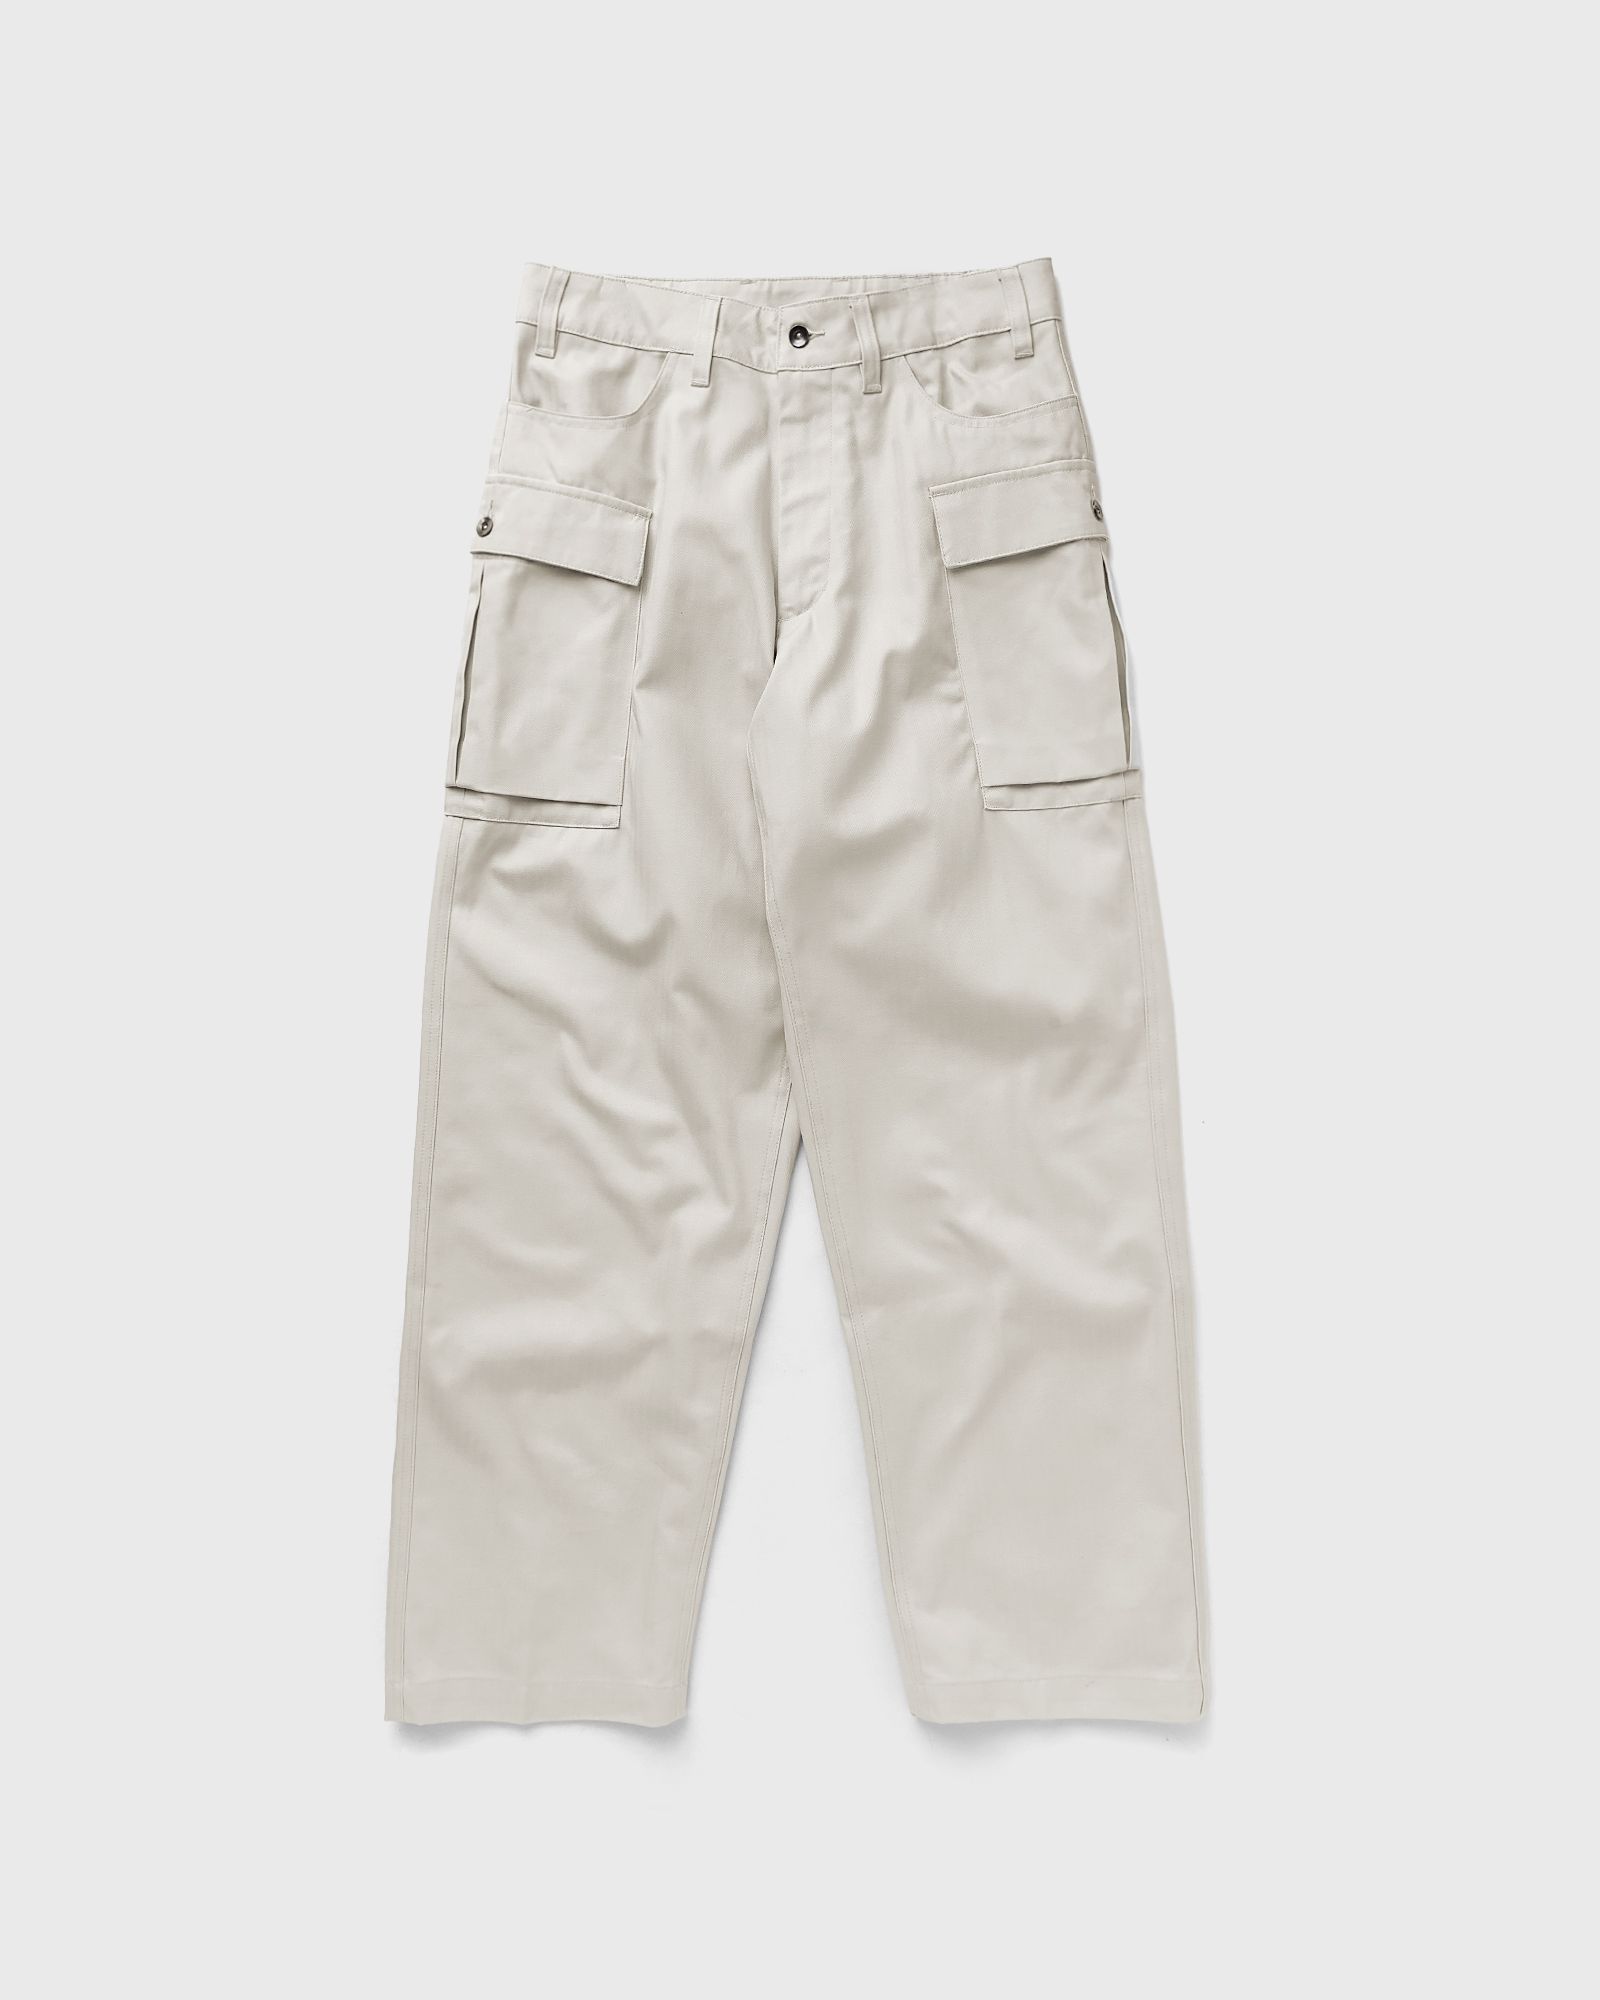 Nike - life cargo pant men cargo pants beige in größe:3xl